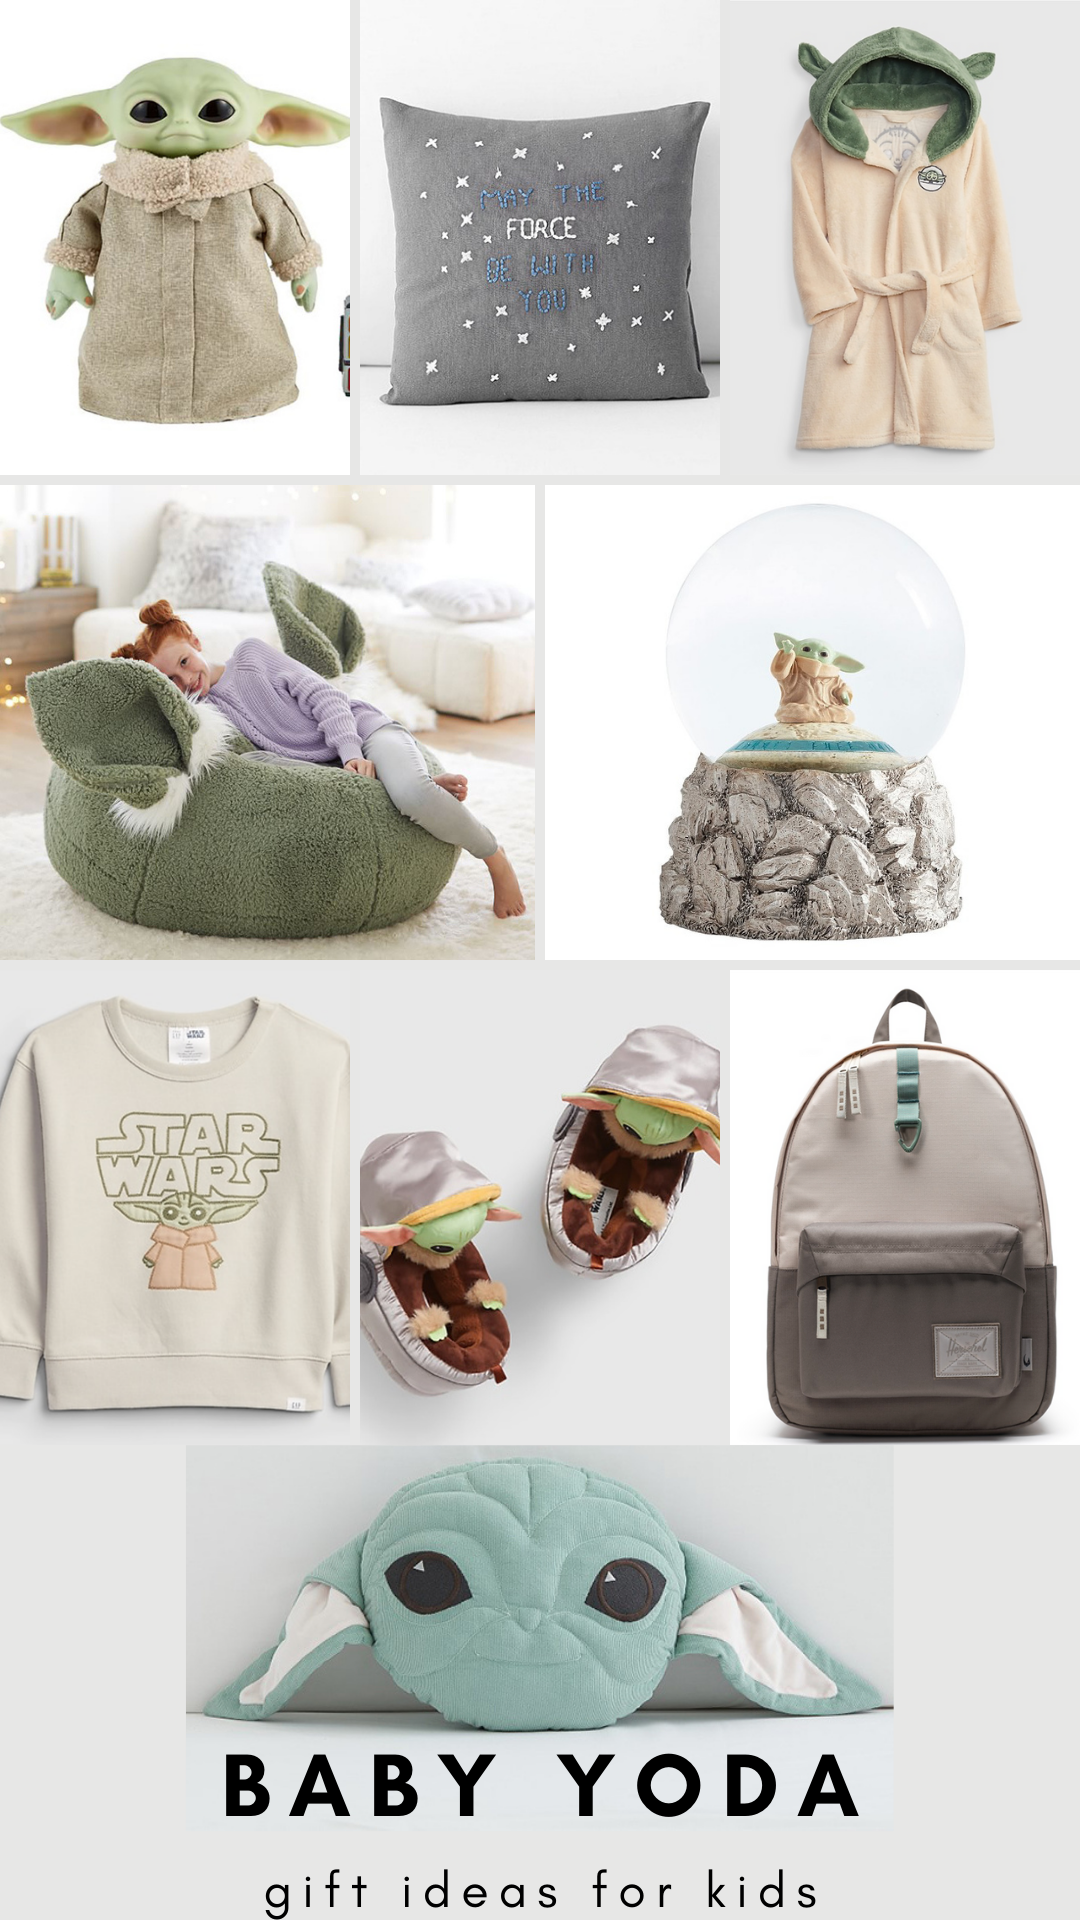 Baby Yoda gift ideas for kids